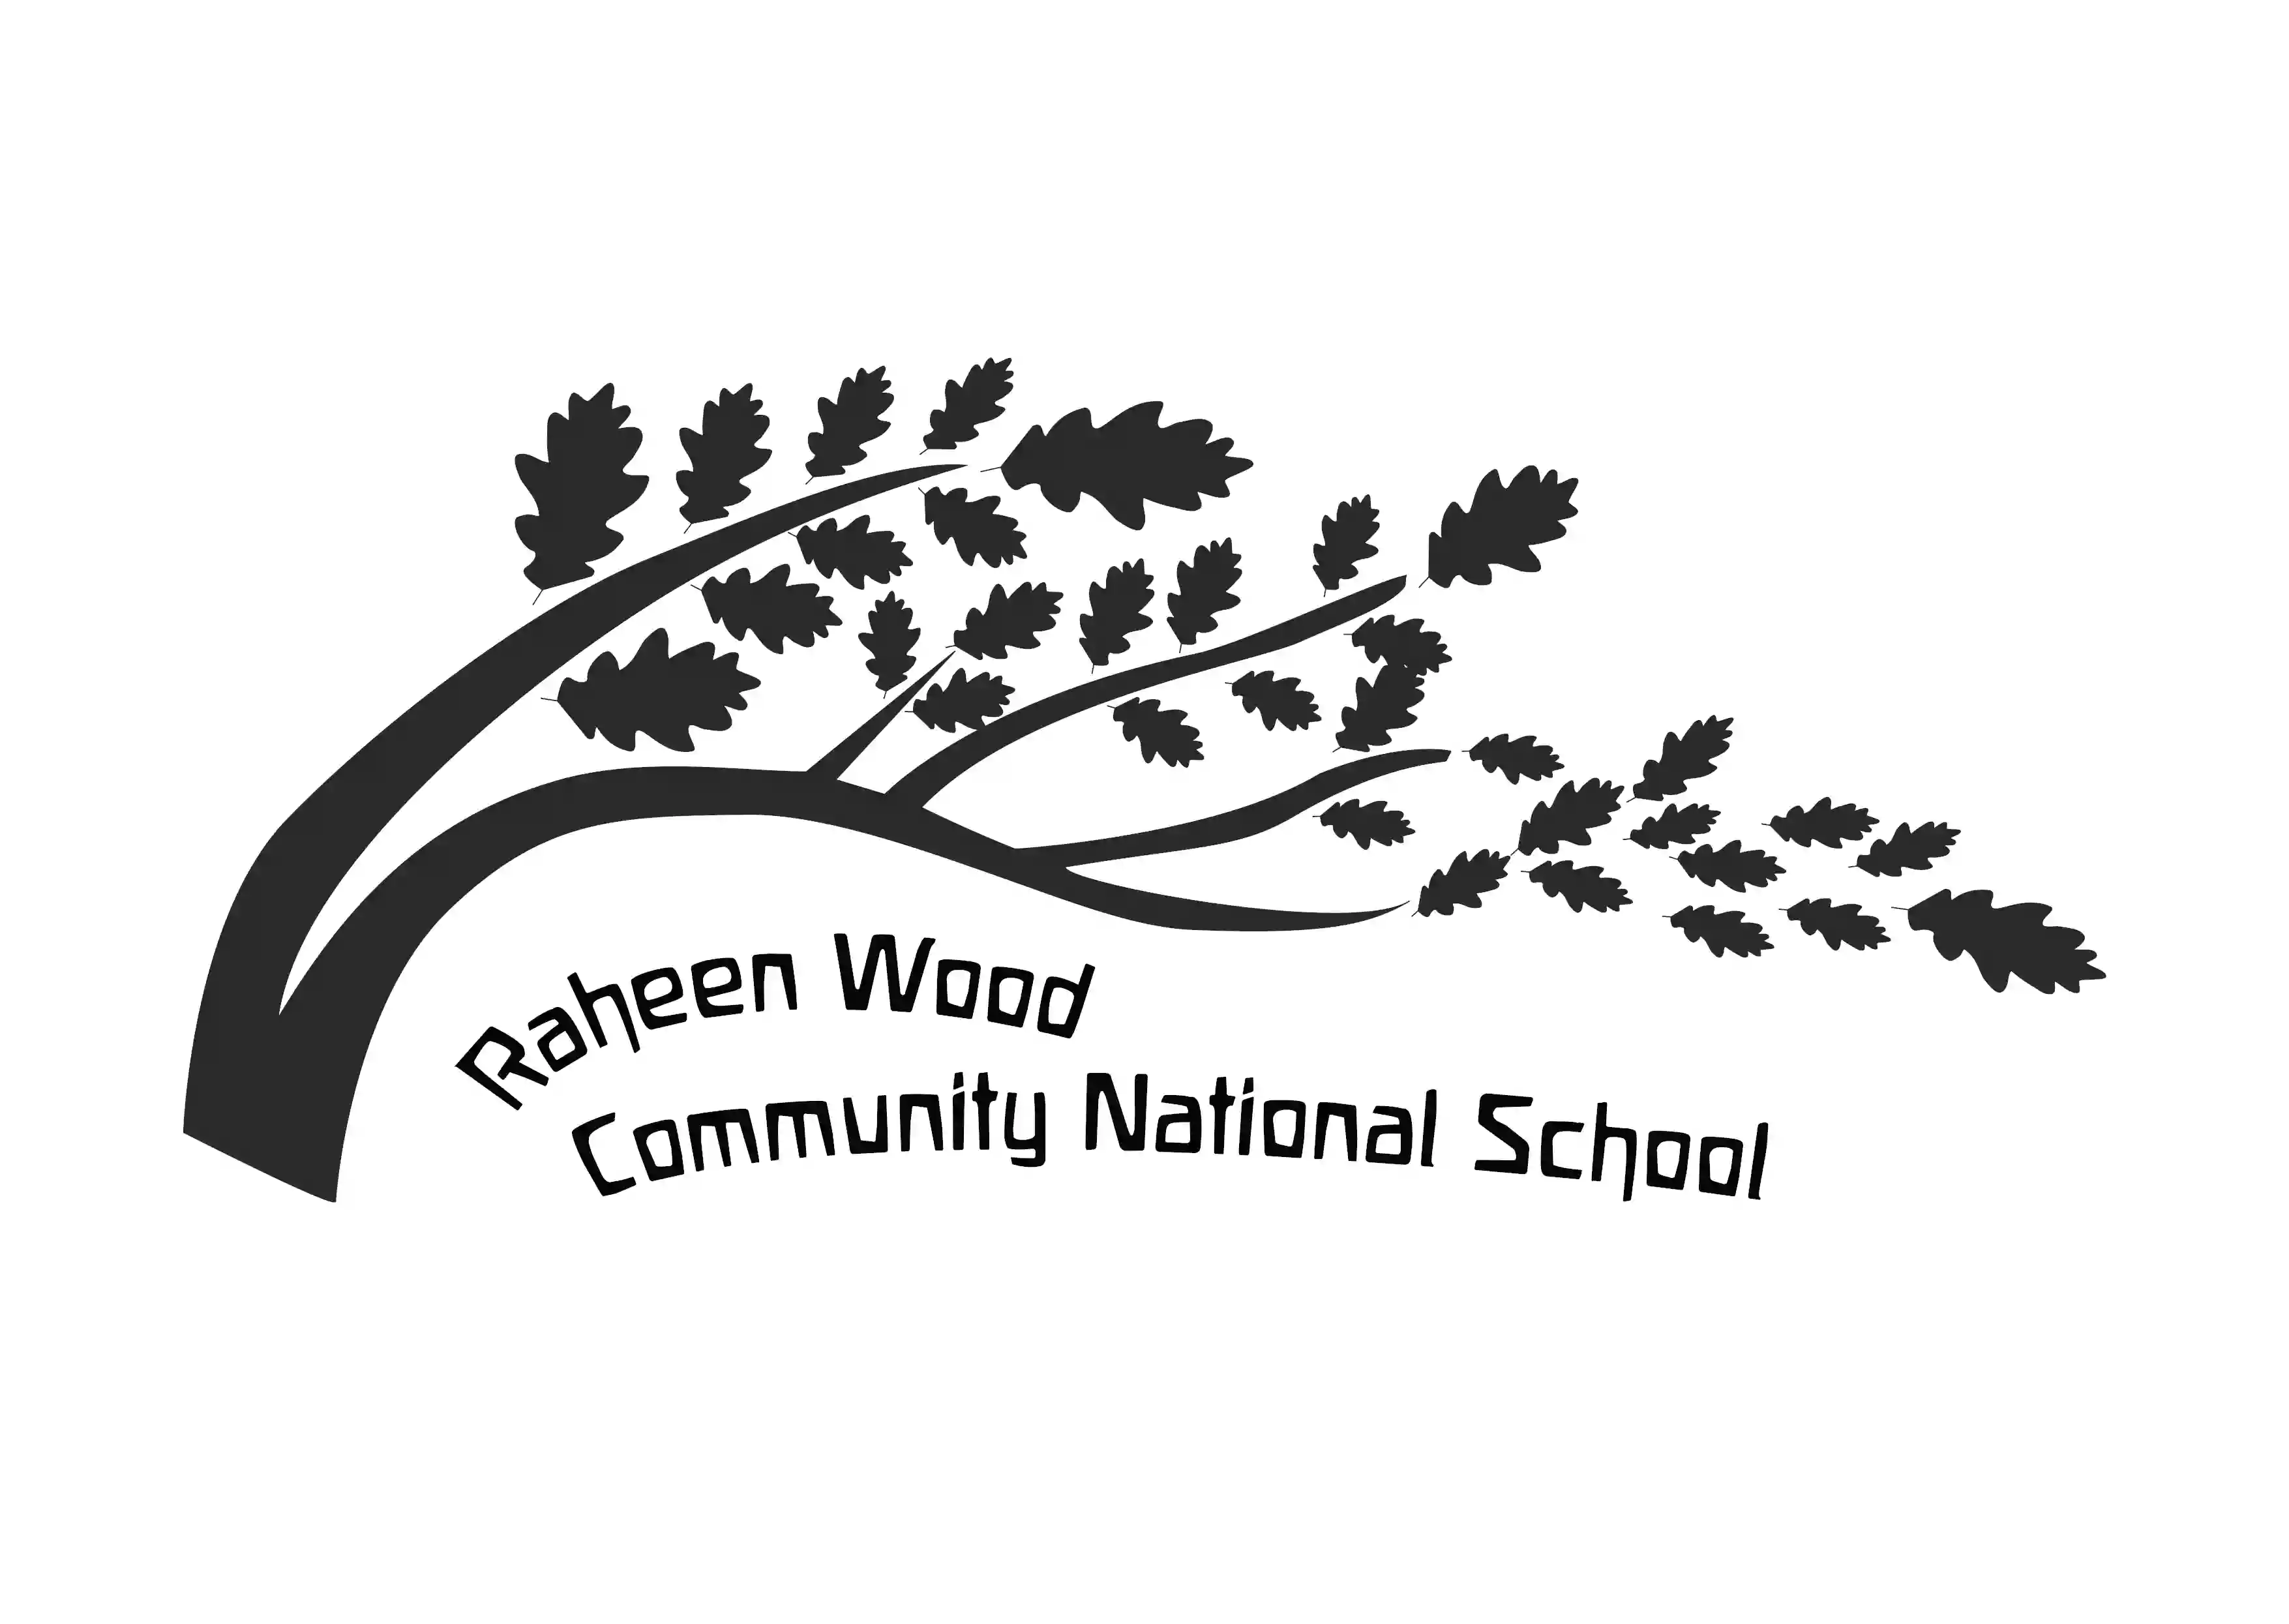 Raheen Wood Community National School